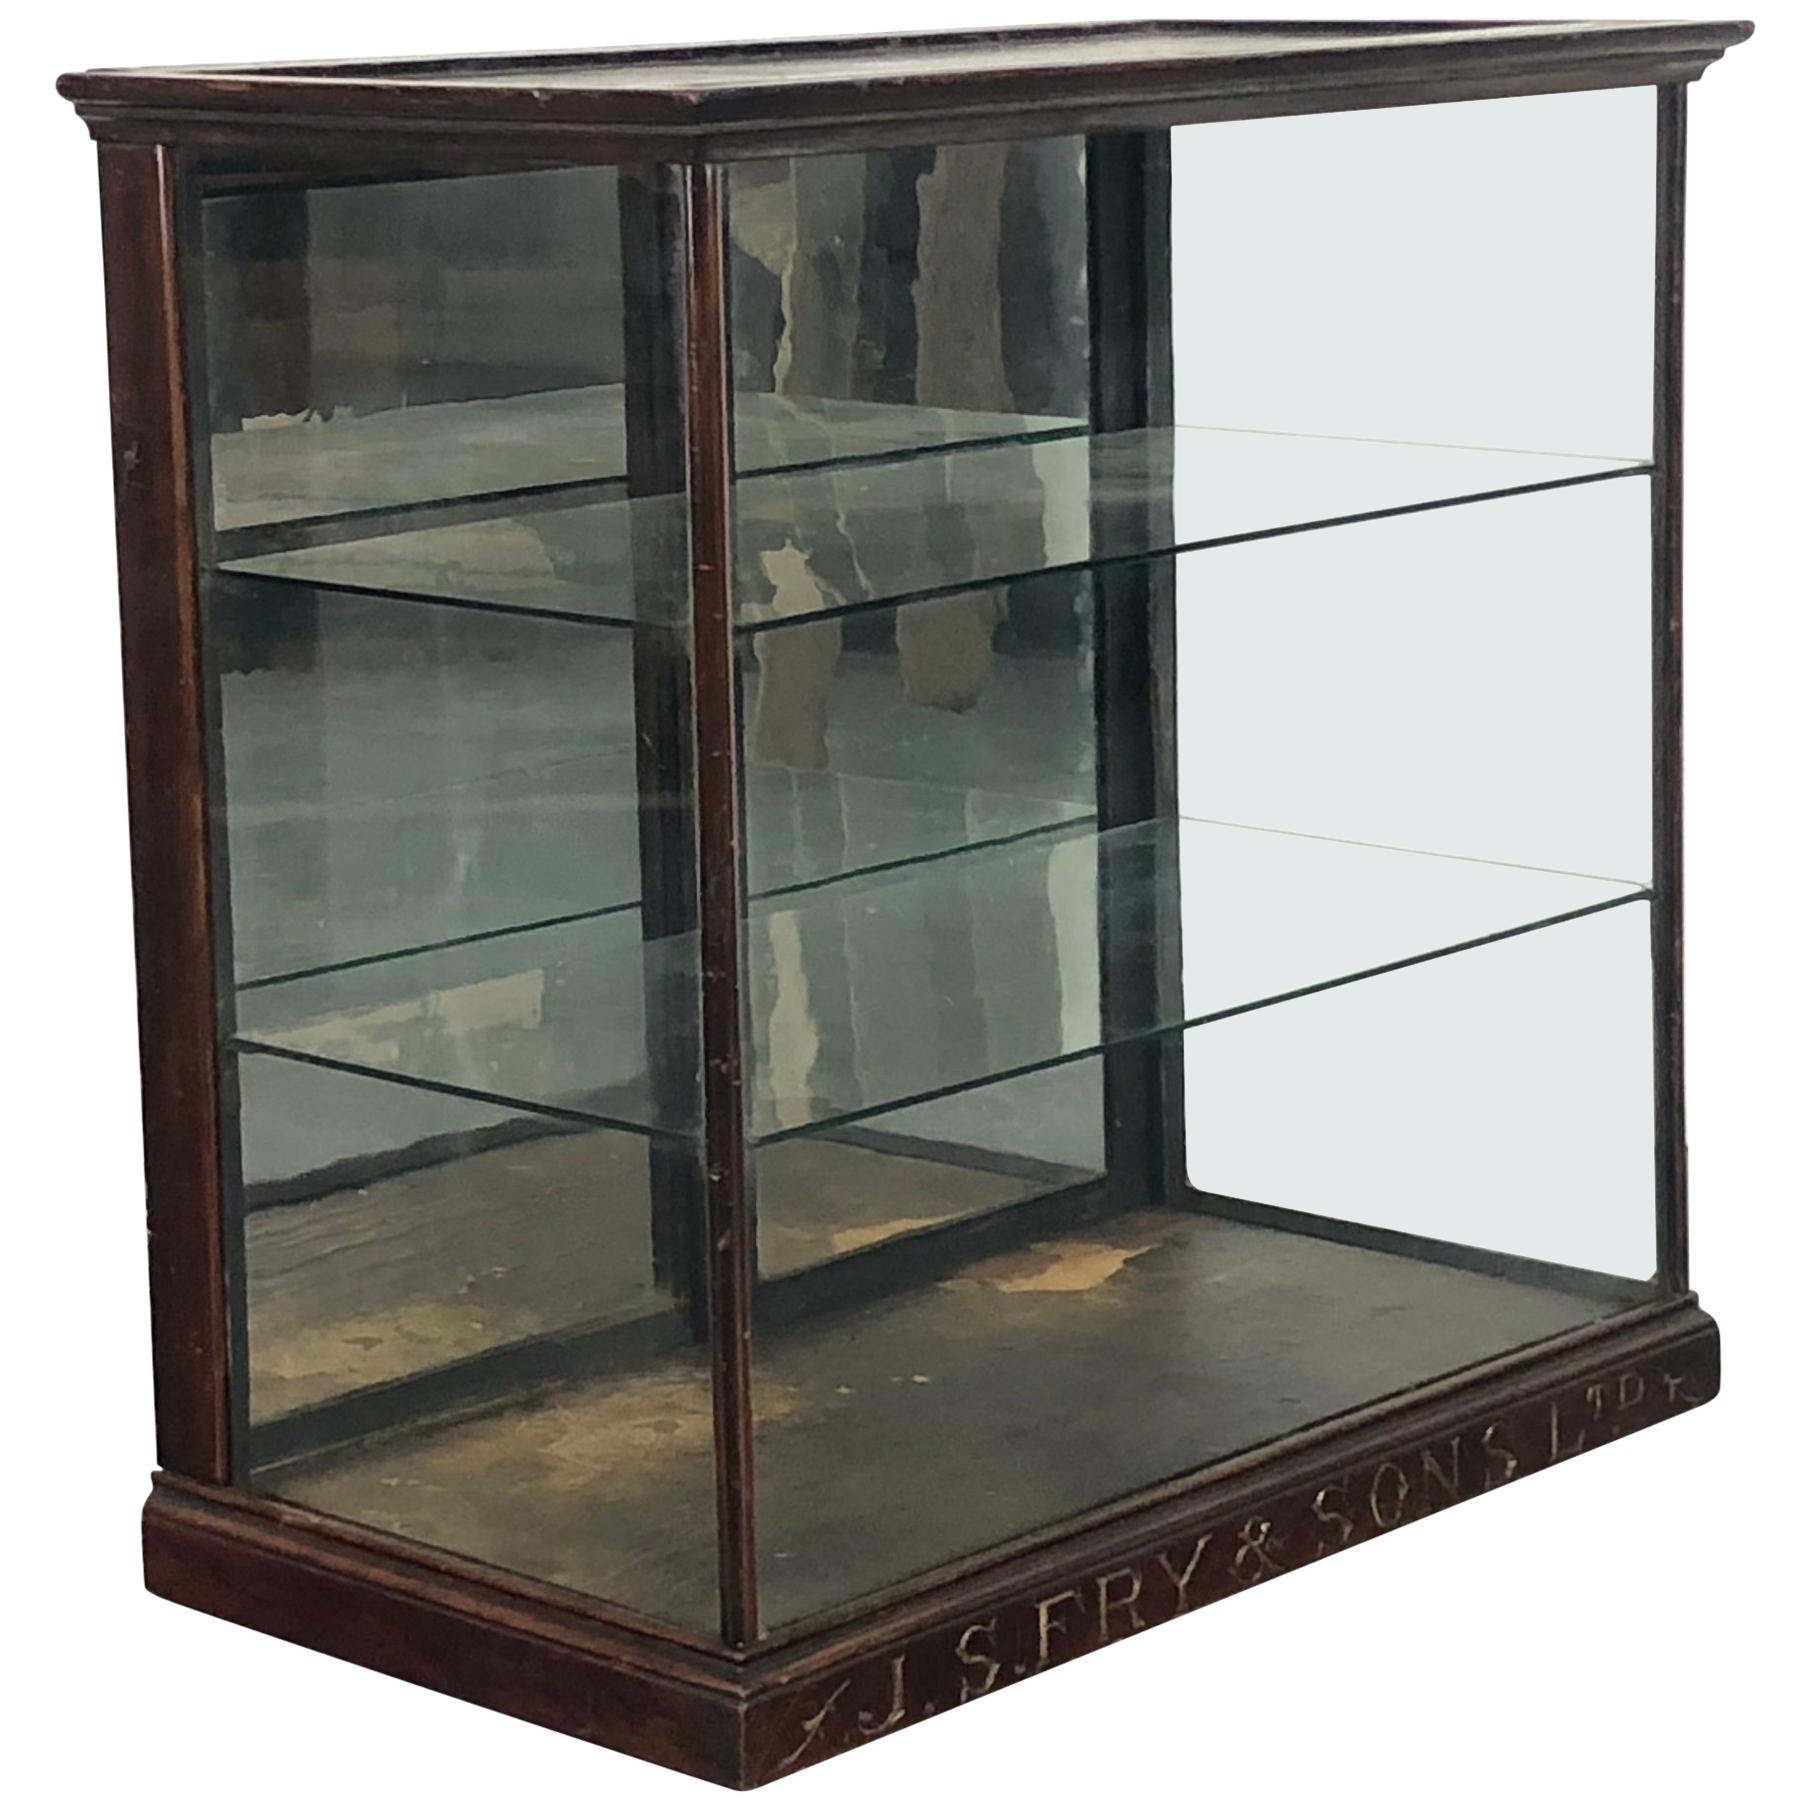 Vintage Industrial Glazed Fry's Chocolate Shop Cabinet